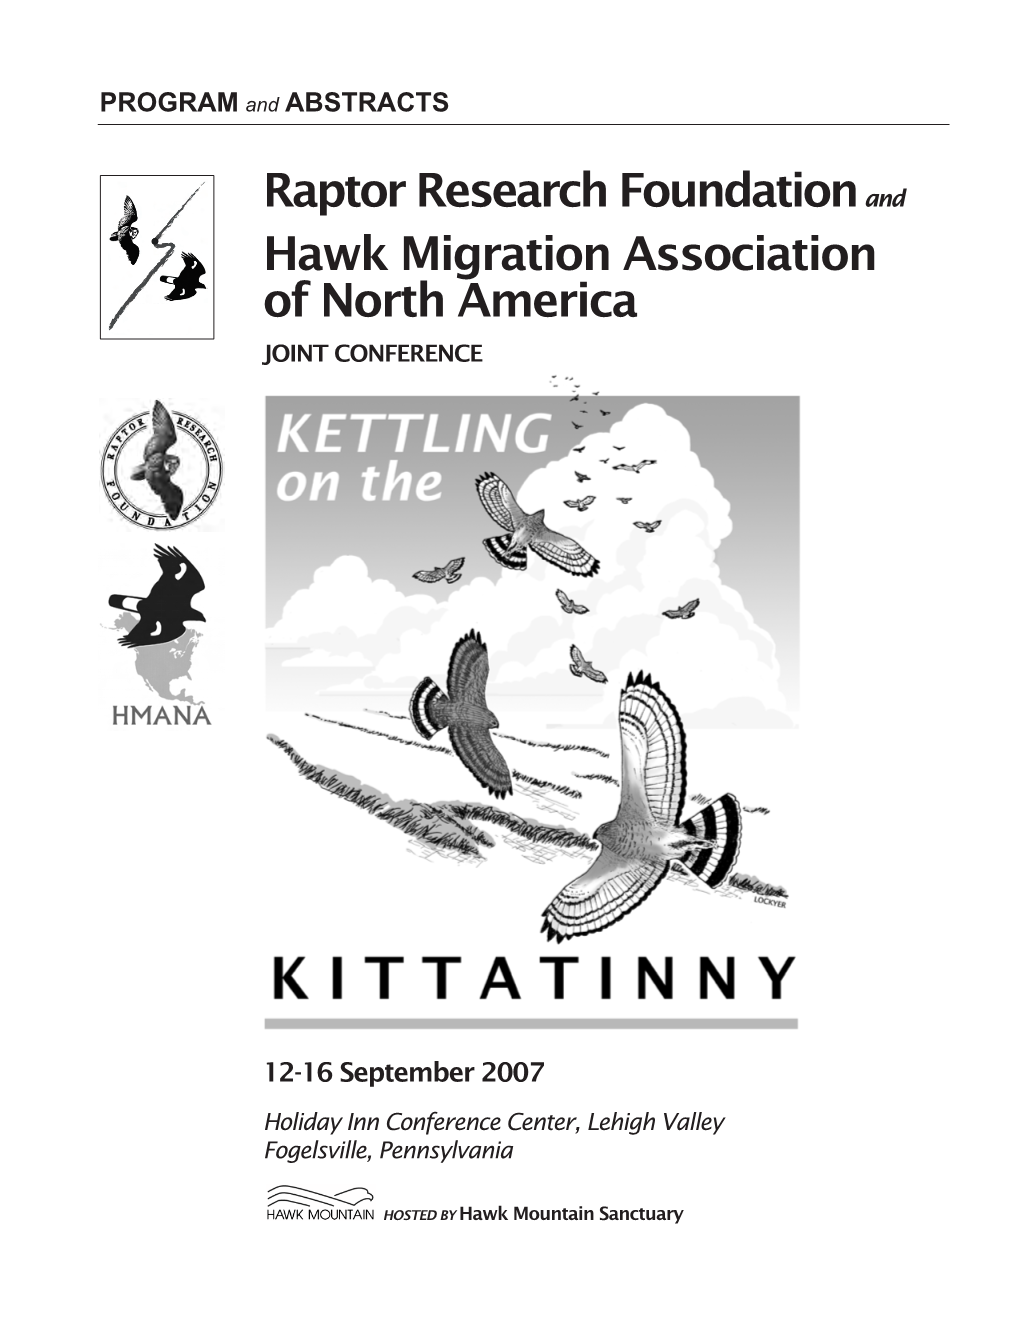 Raptor Research Foundationand Hawk Migration Association of North America